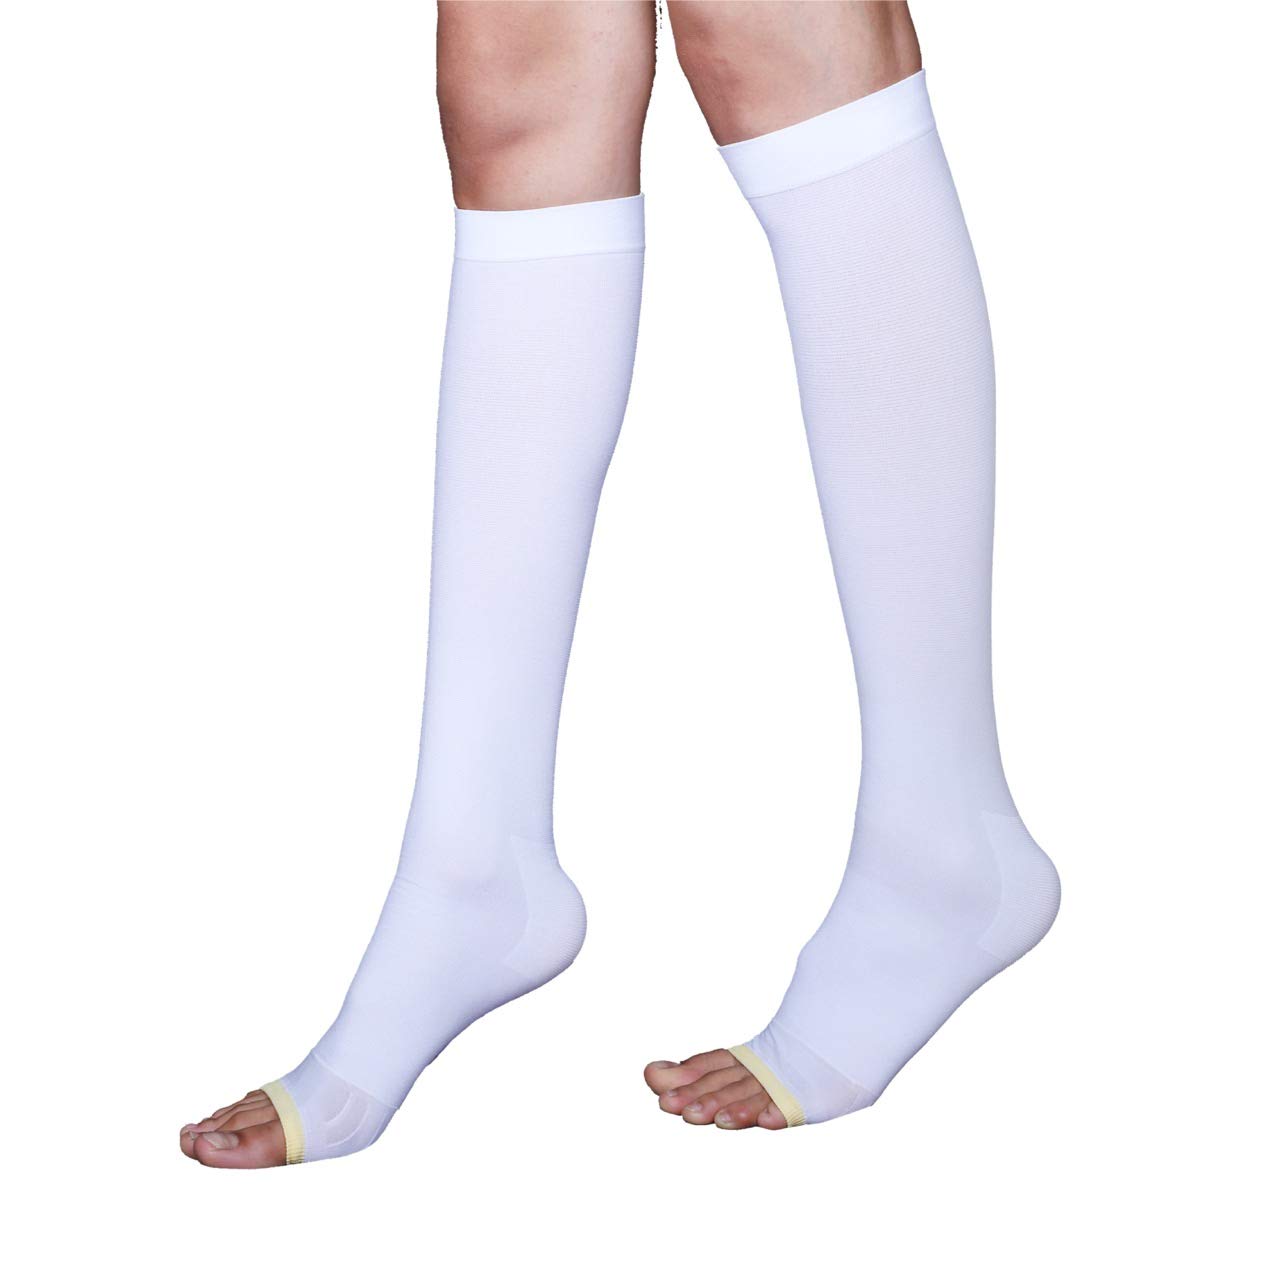 Sorgen Thigh Length Anti Embolism Dvt Stockings White, 1 Pair at Rs 1250.00, Chennai, Kanchipuram